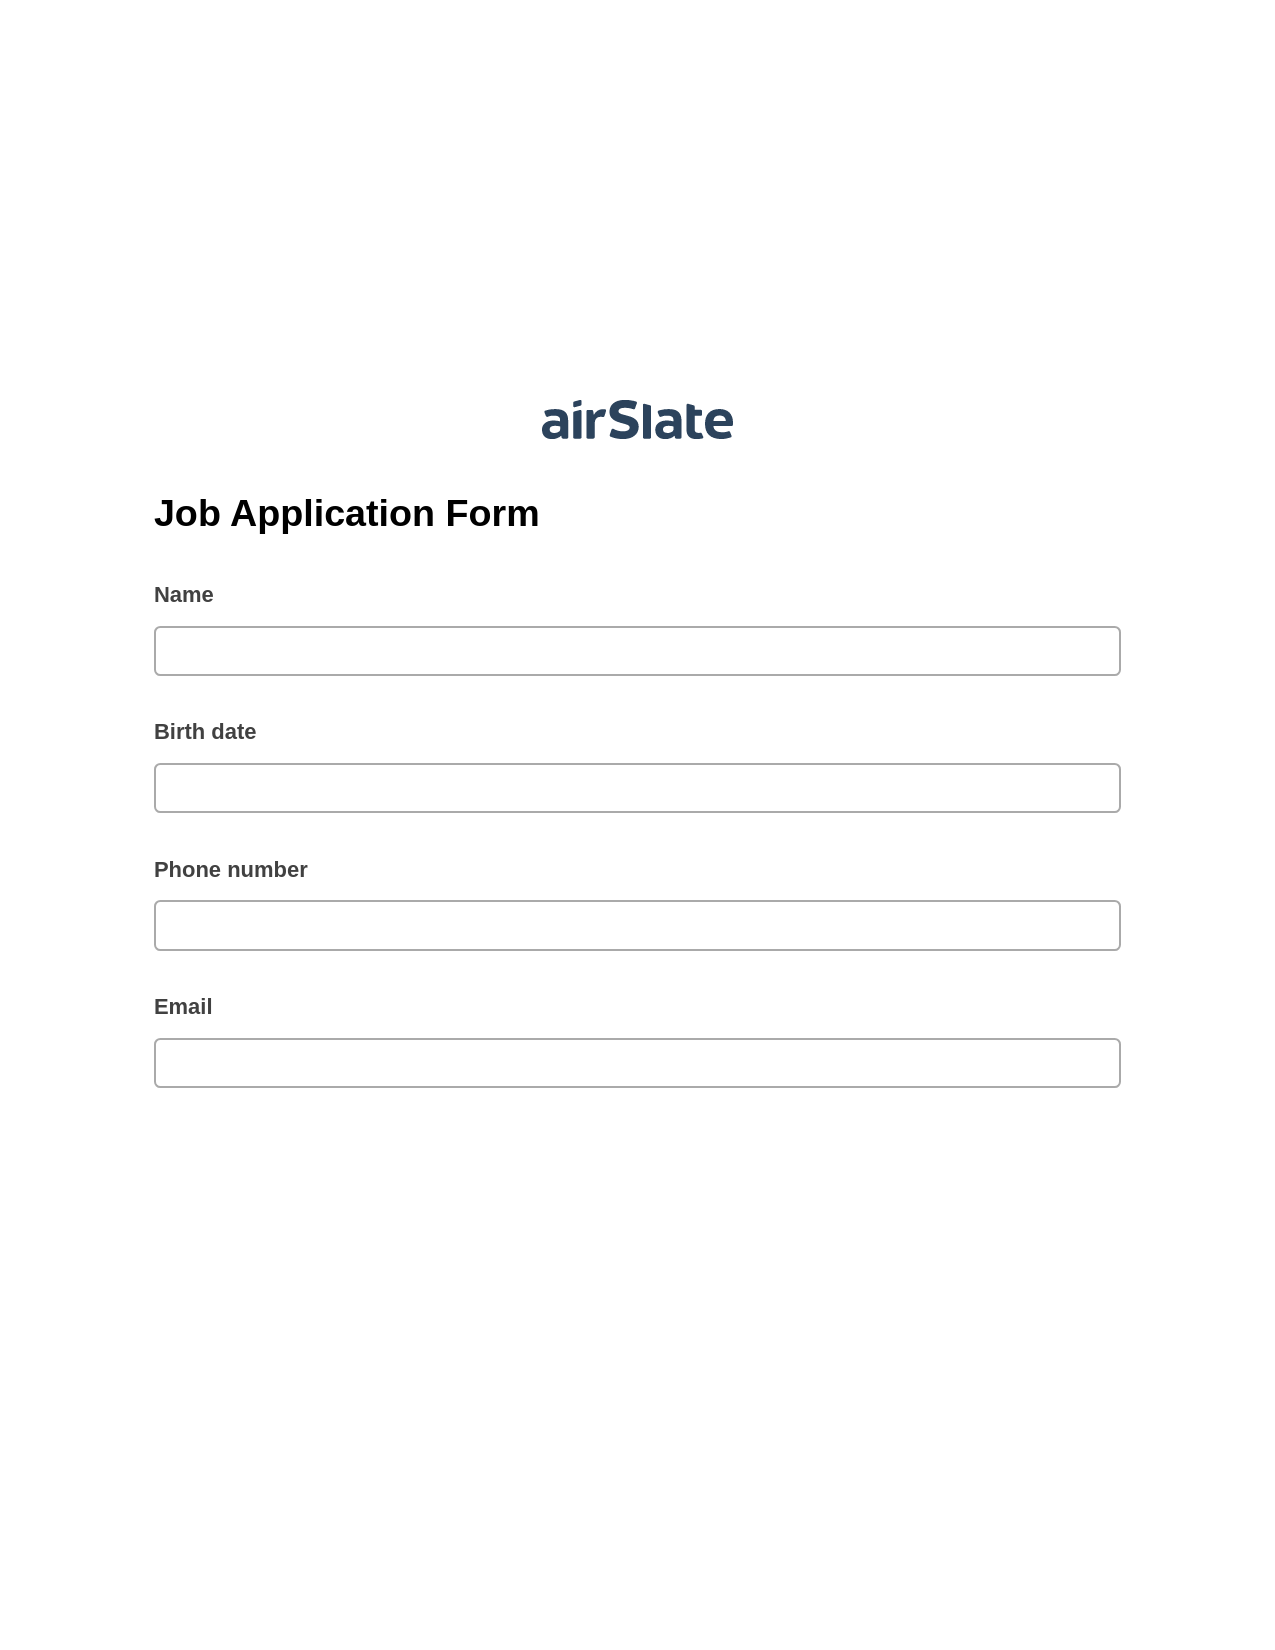 Job Application Form Pre-fill from MySQL Dropdown Options Bot, Create slate bot, Dropbox Bot